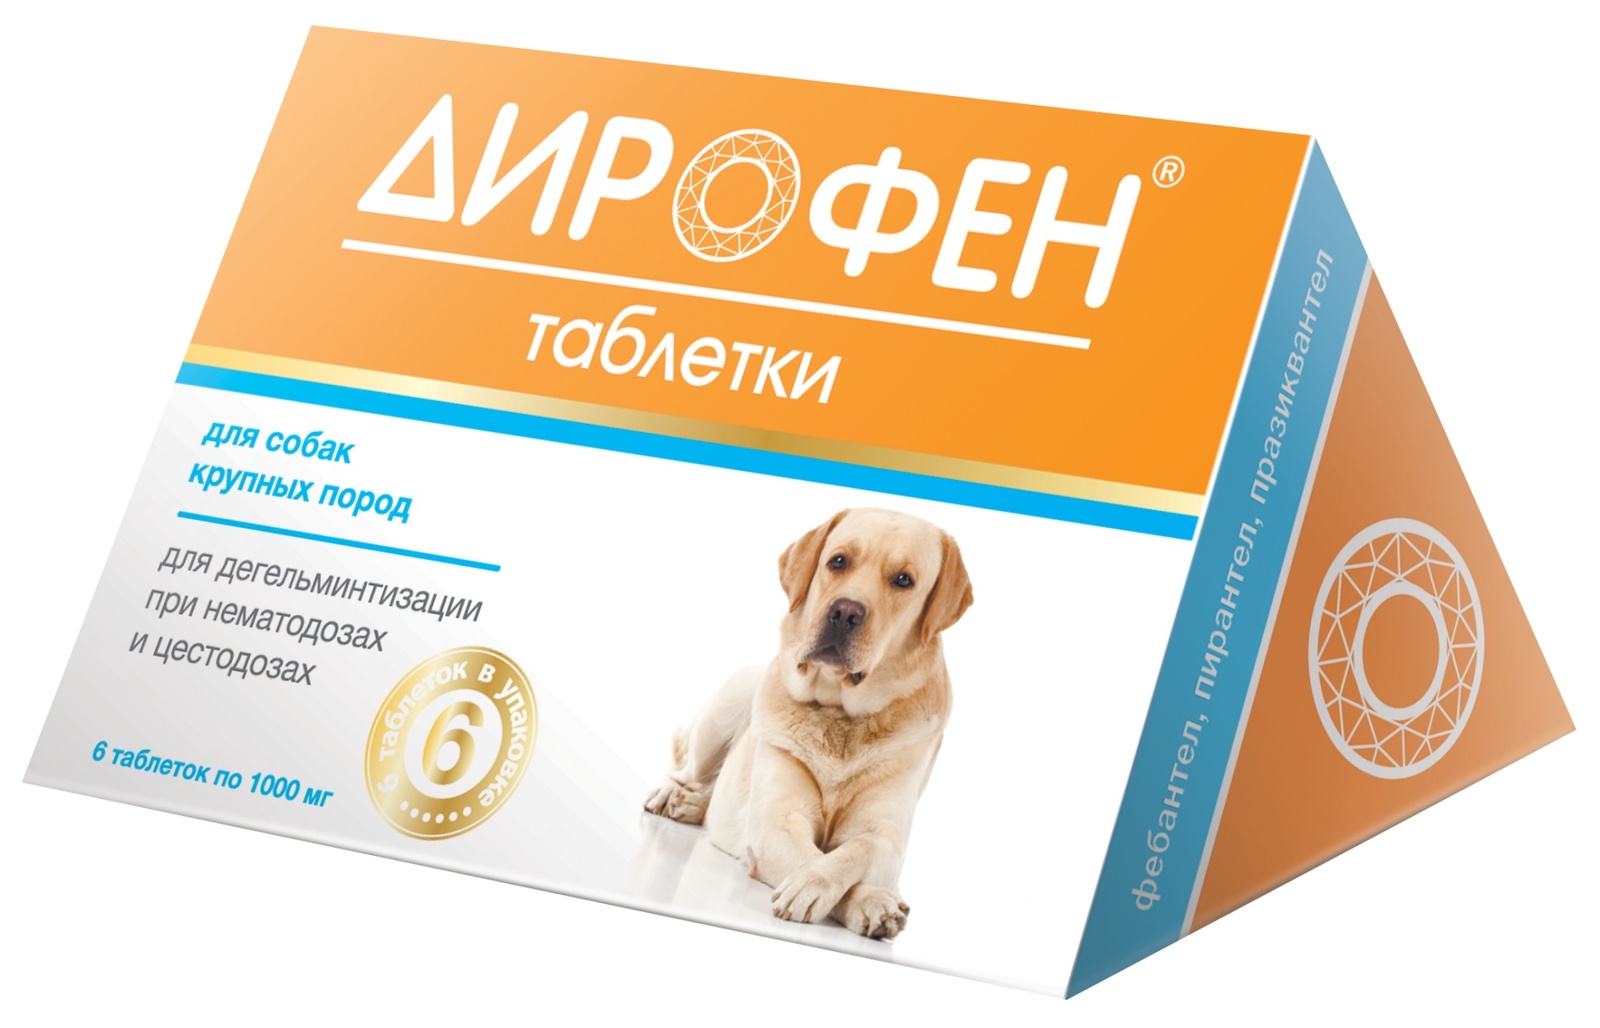 Apicenna Apicenna дирофен Плюс таблетки от глистов для крупных собак (19 г) apicenna дирофен таблетки при нематозах и цестозах у собак крупных пород 6 таблеток